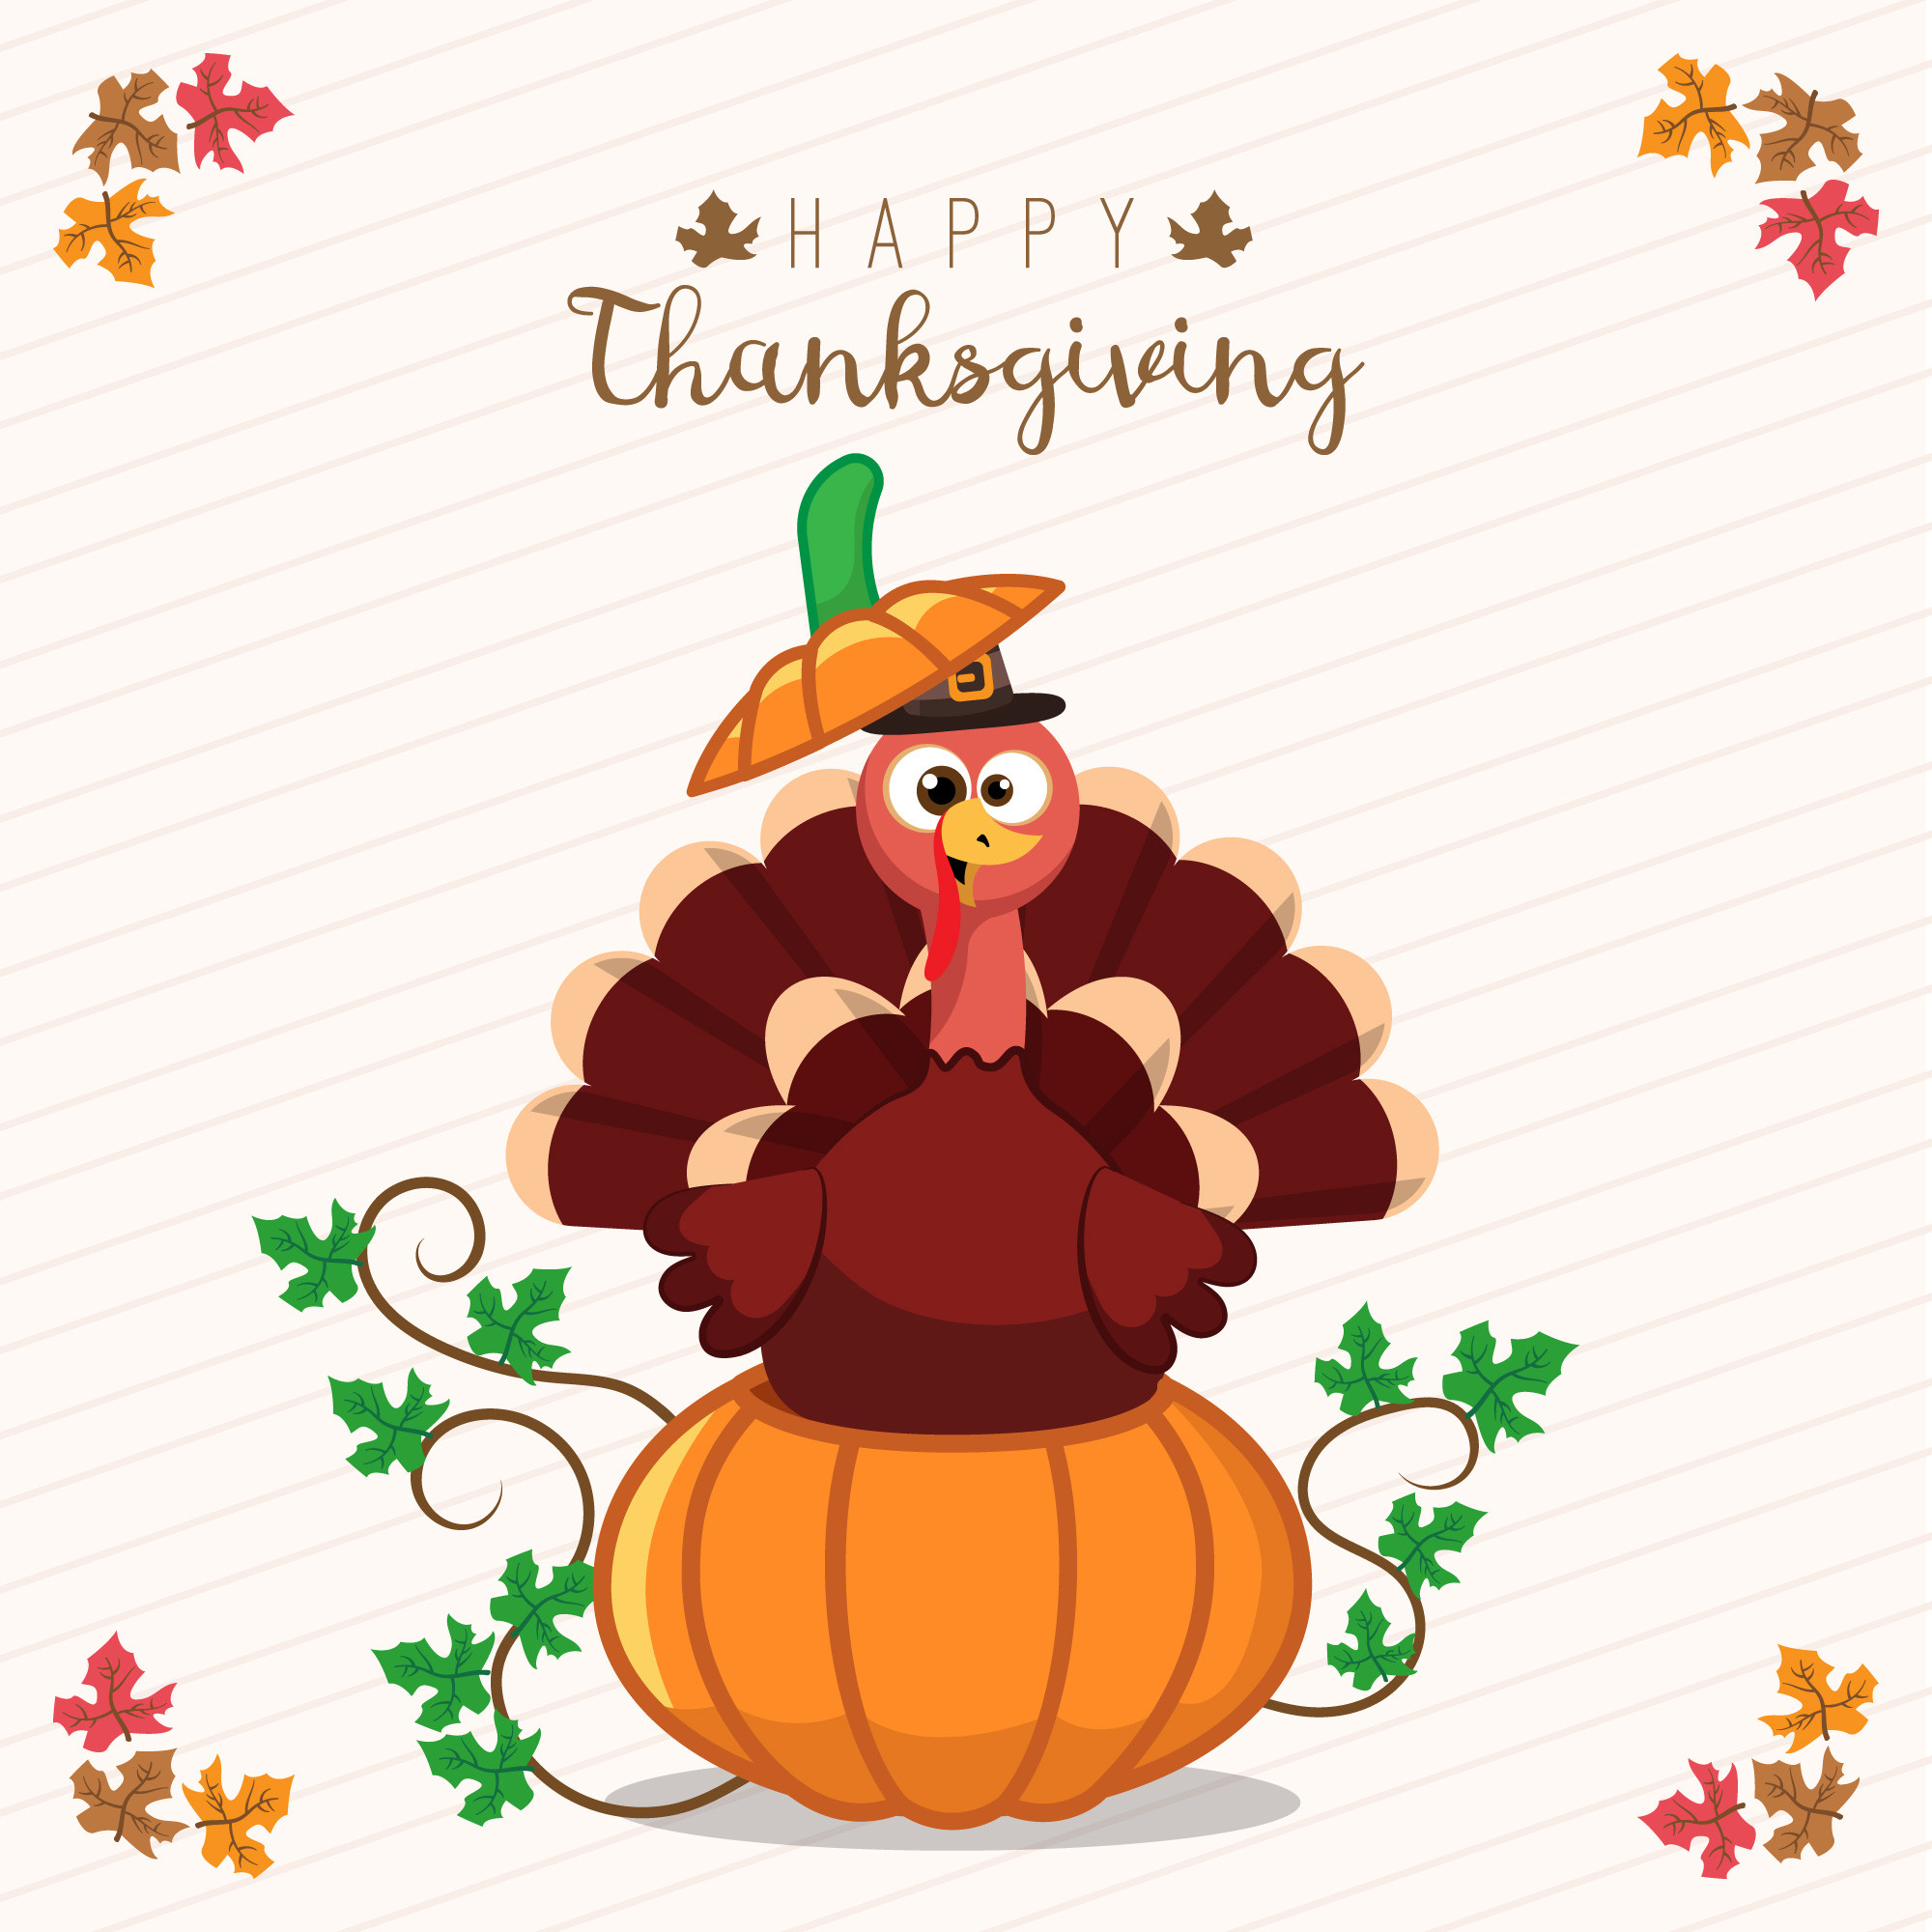 Cartoon Thanksgiving Turkey
 Thanksgiving greeting card with a turkey and pumpkin